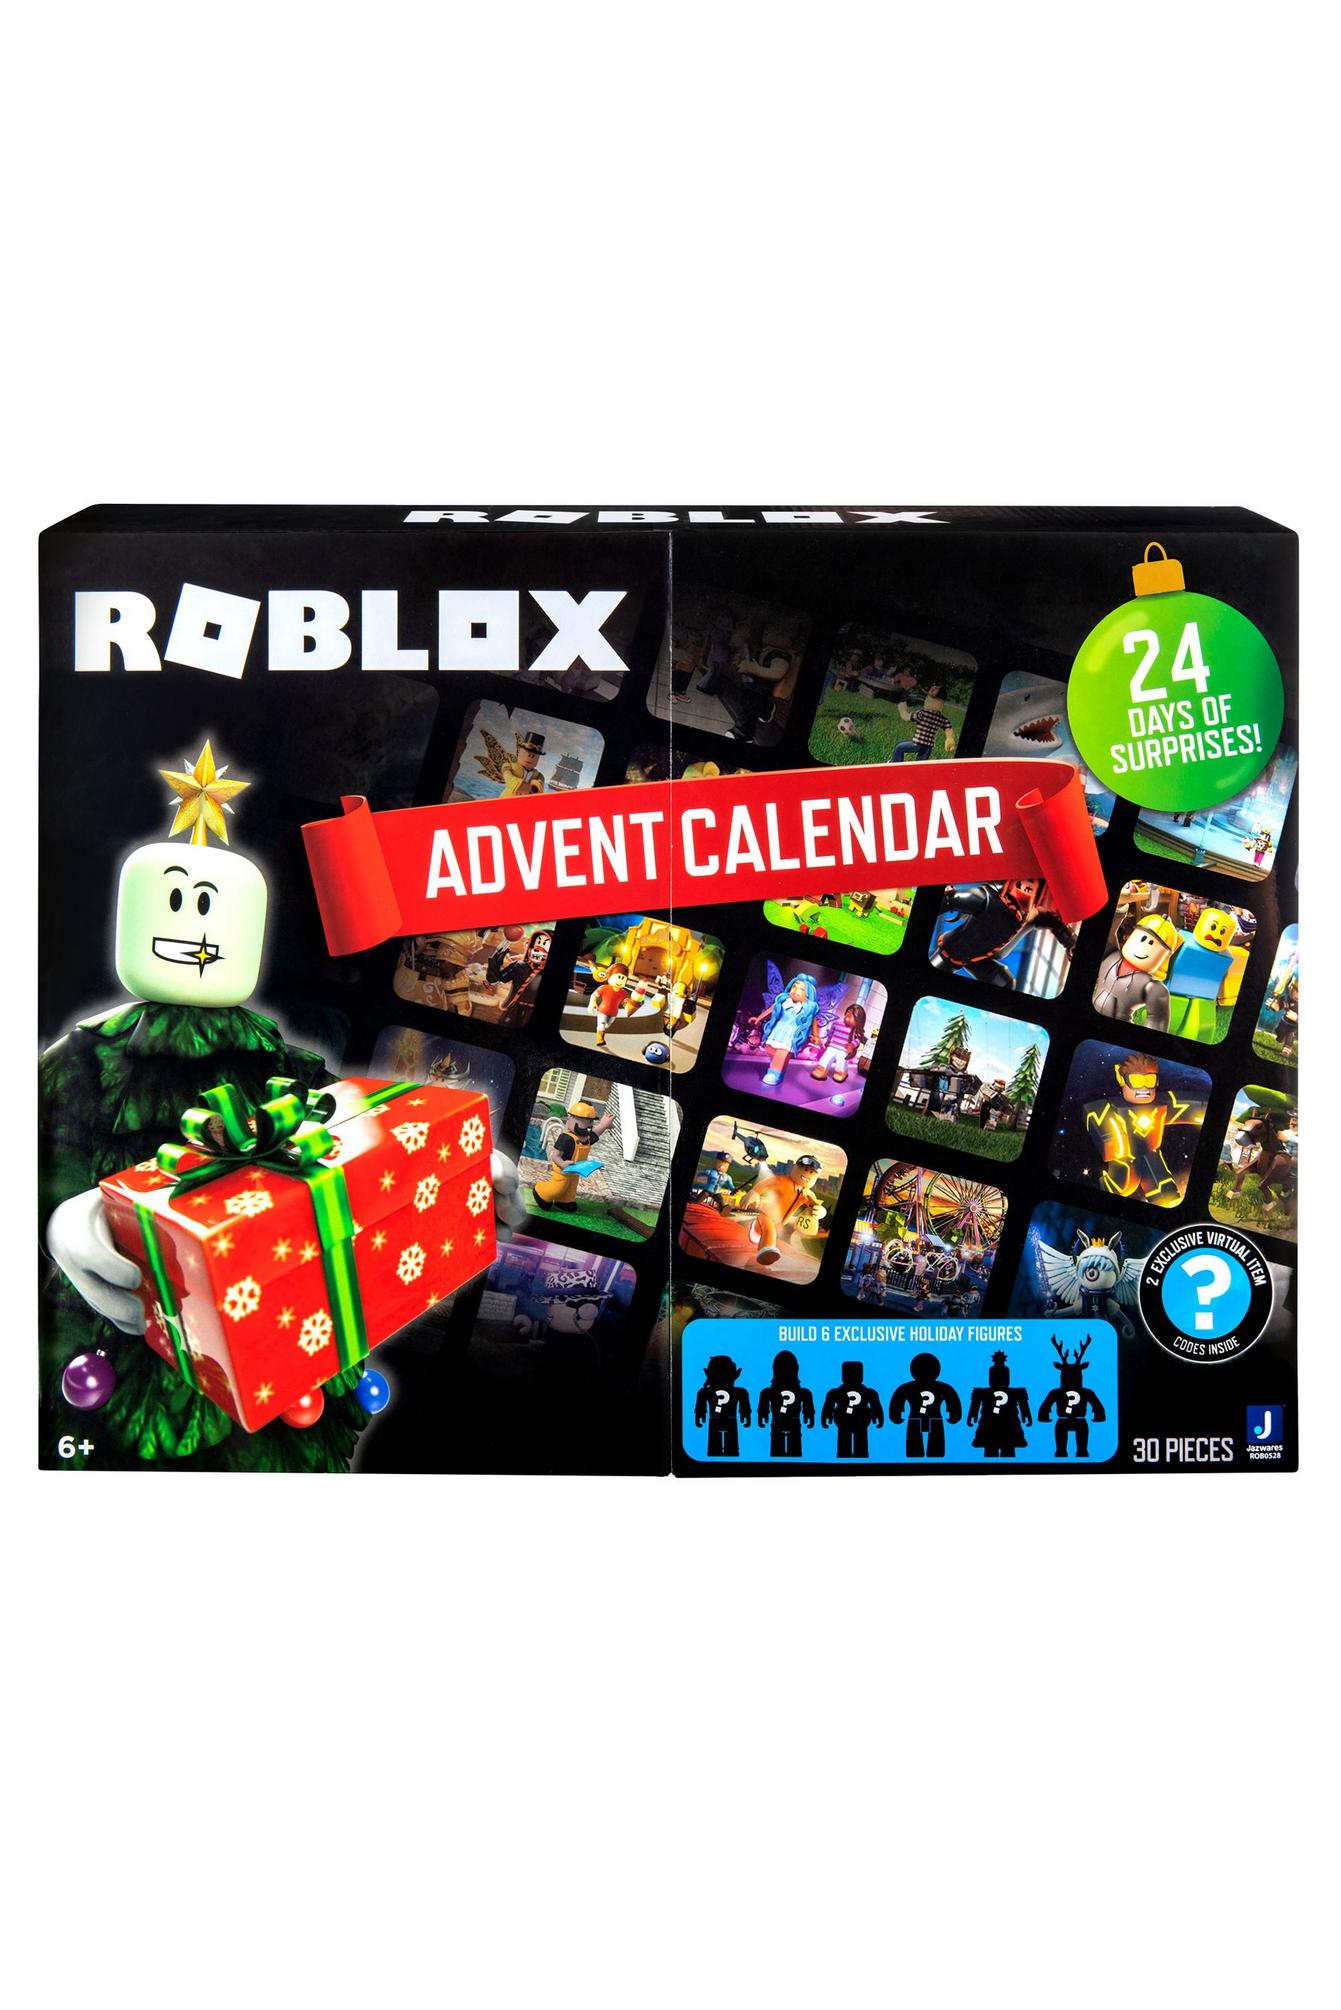 Roblox advent calendar